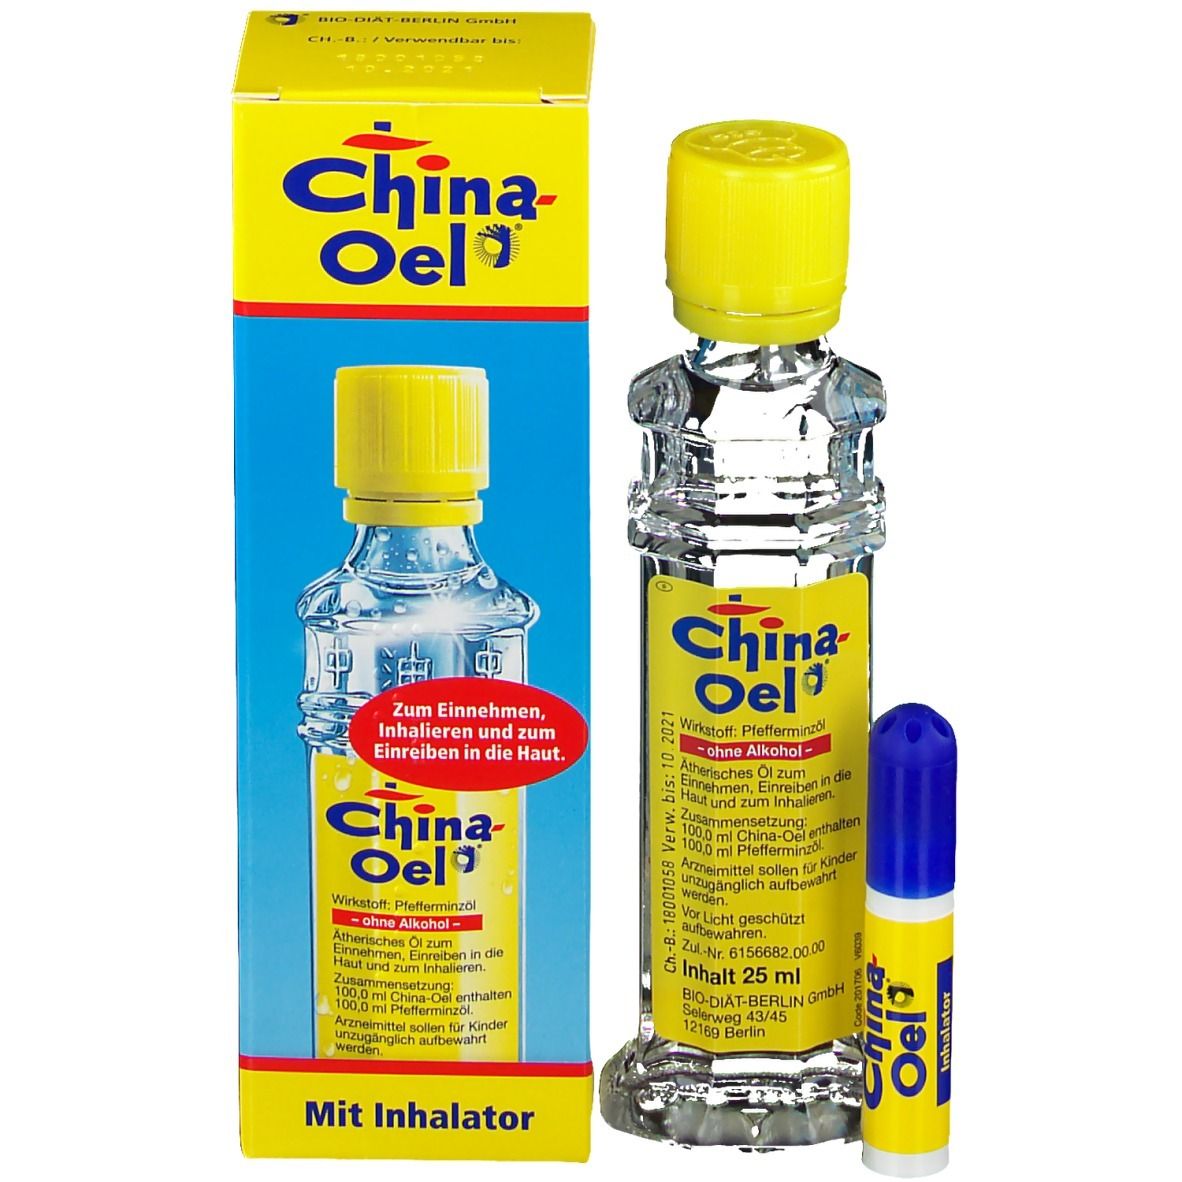 China-Oel® mit Inhalator